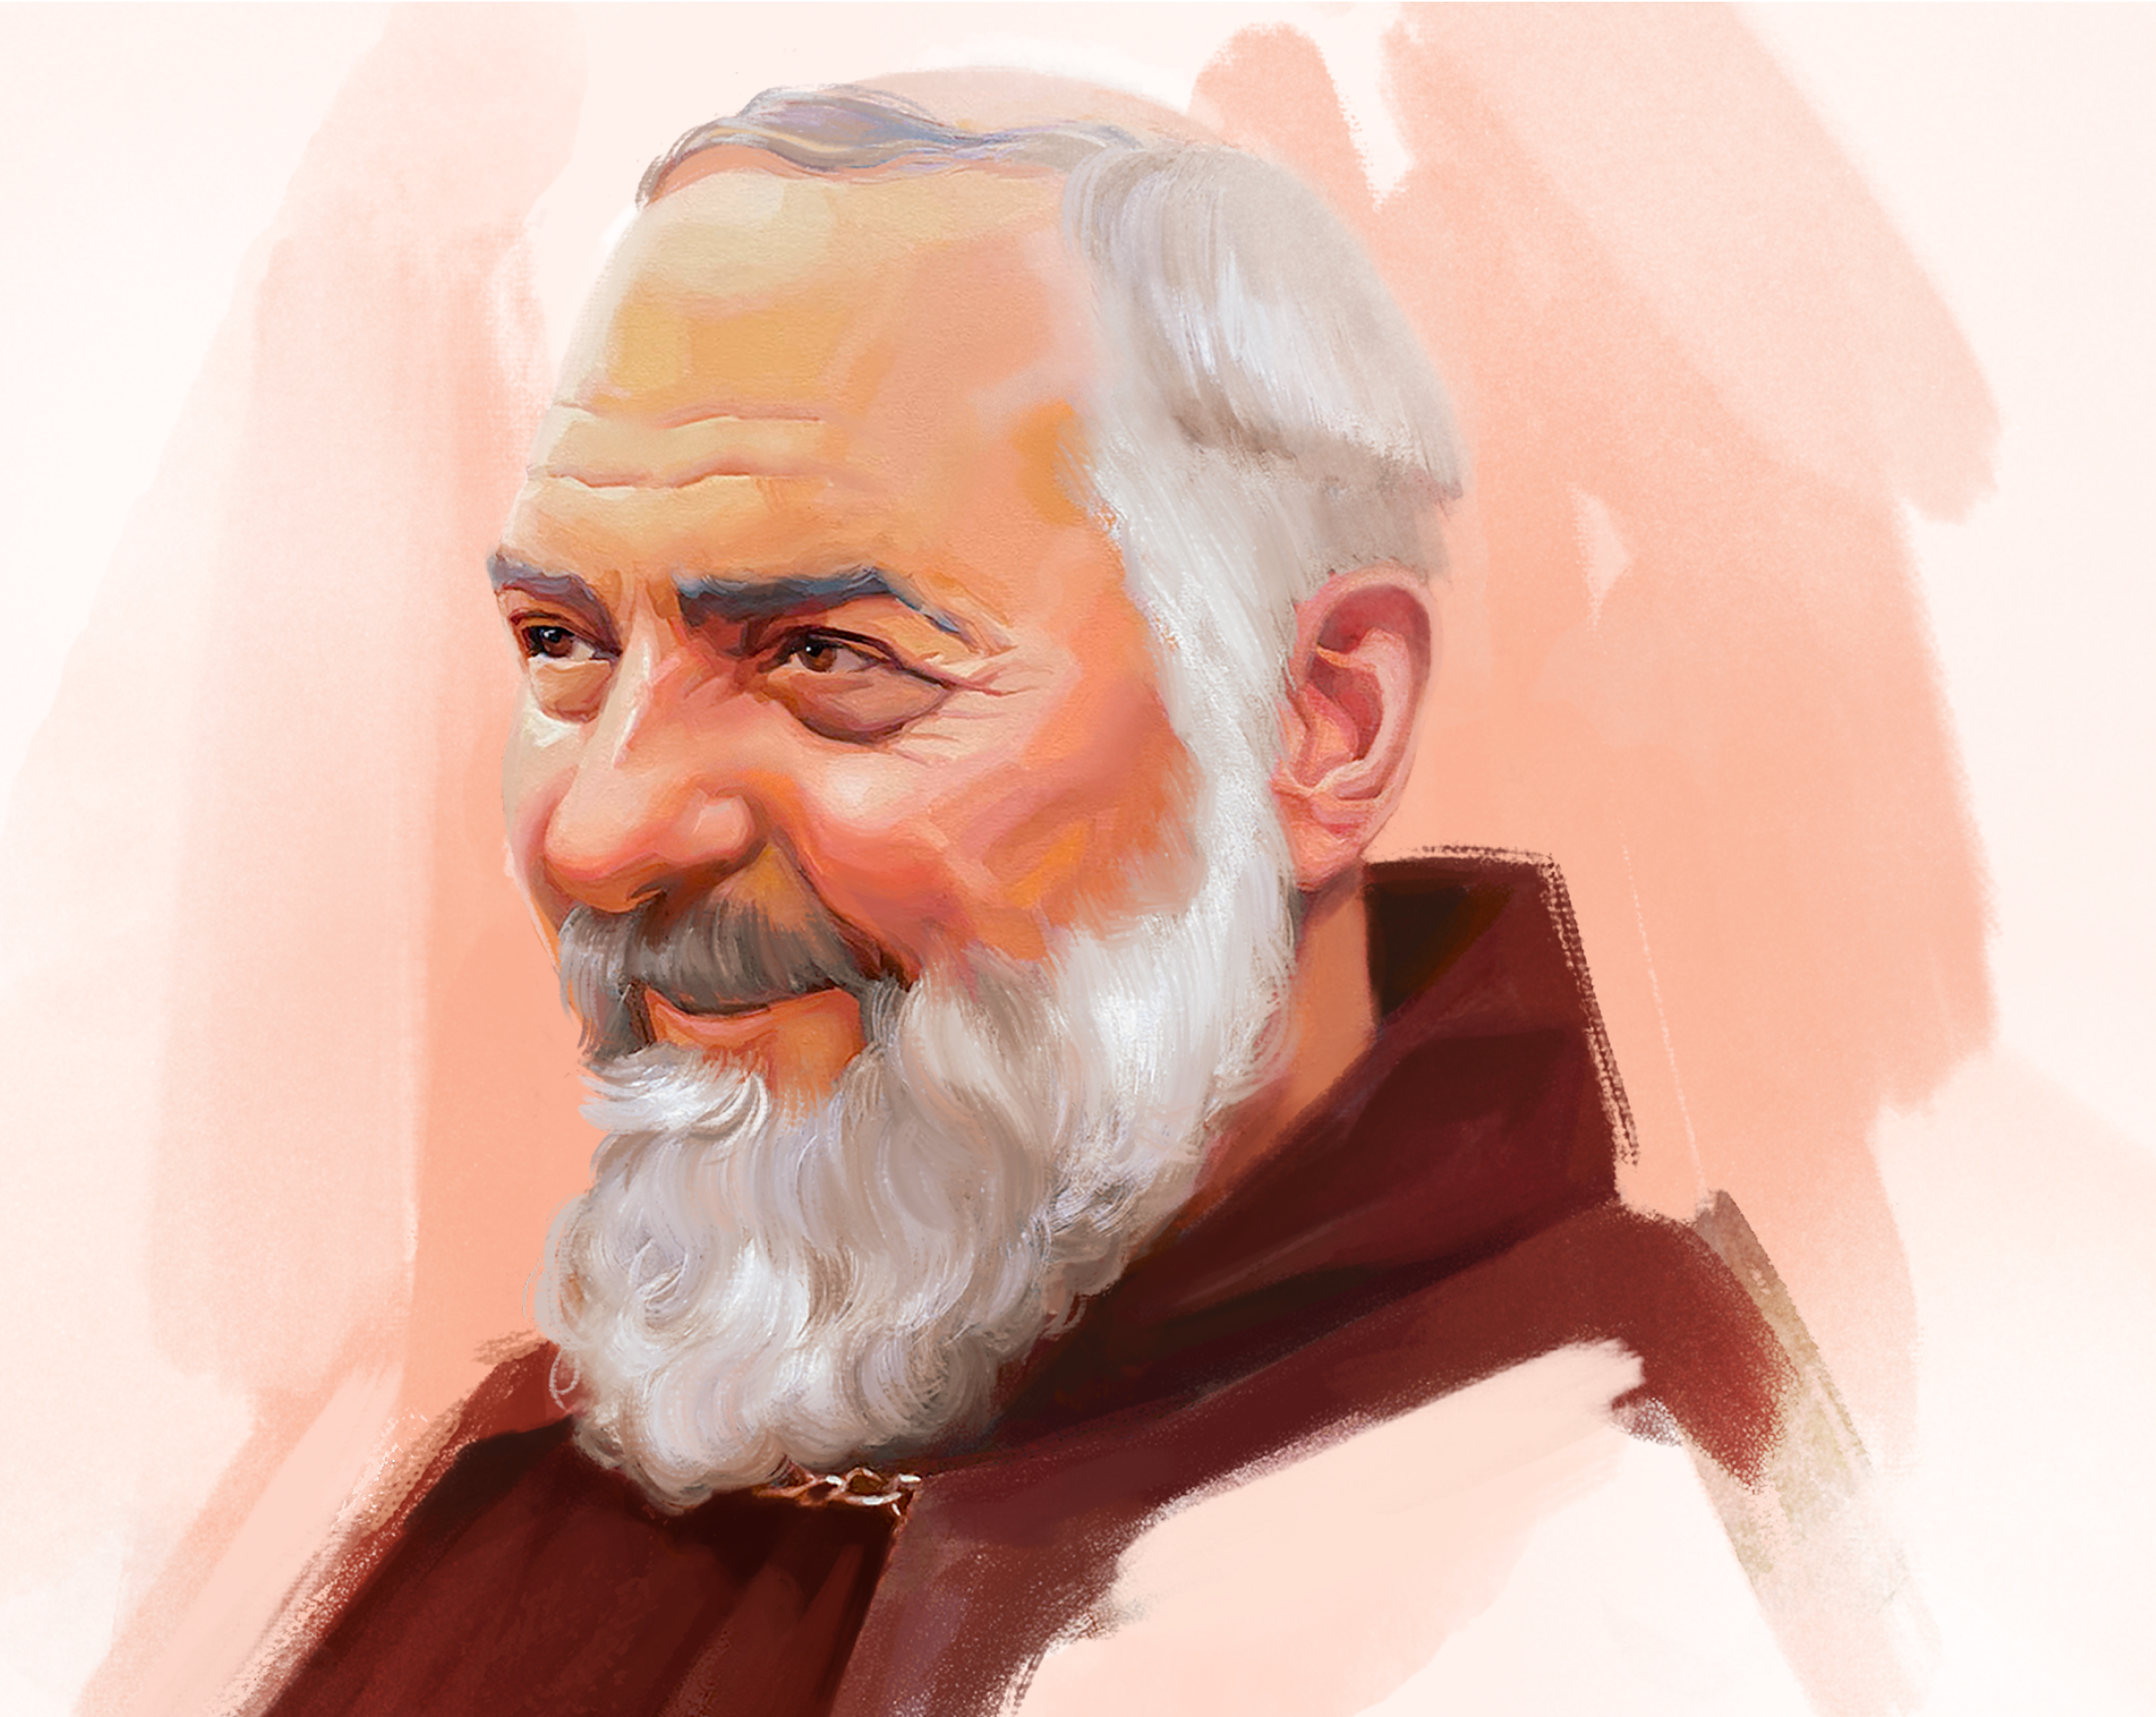 St. Padre Pio